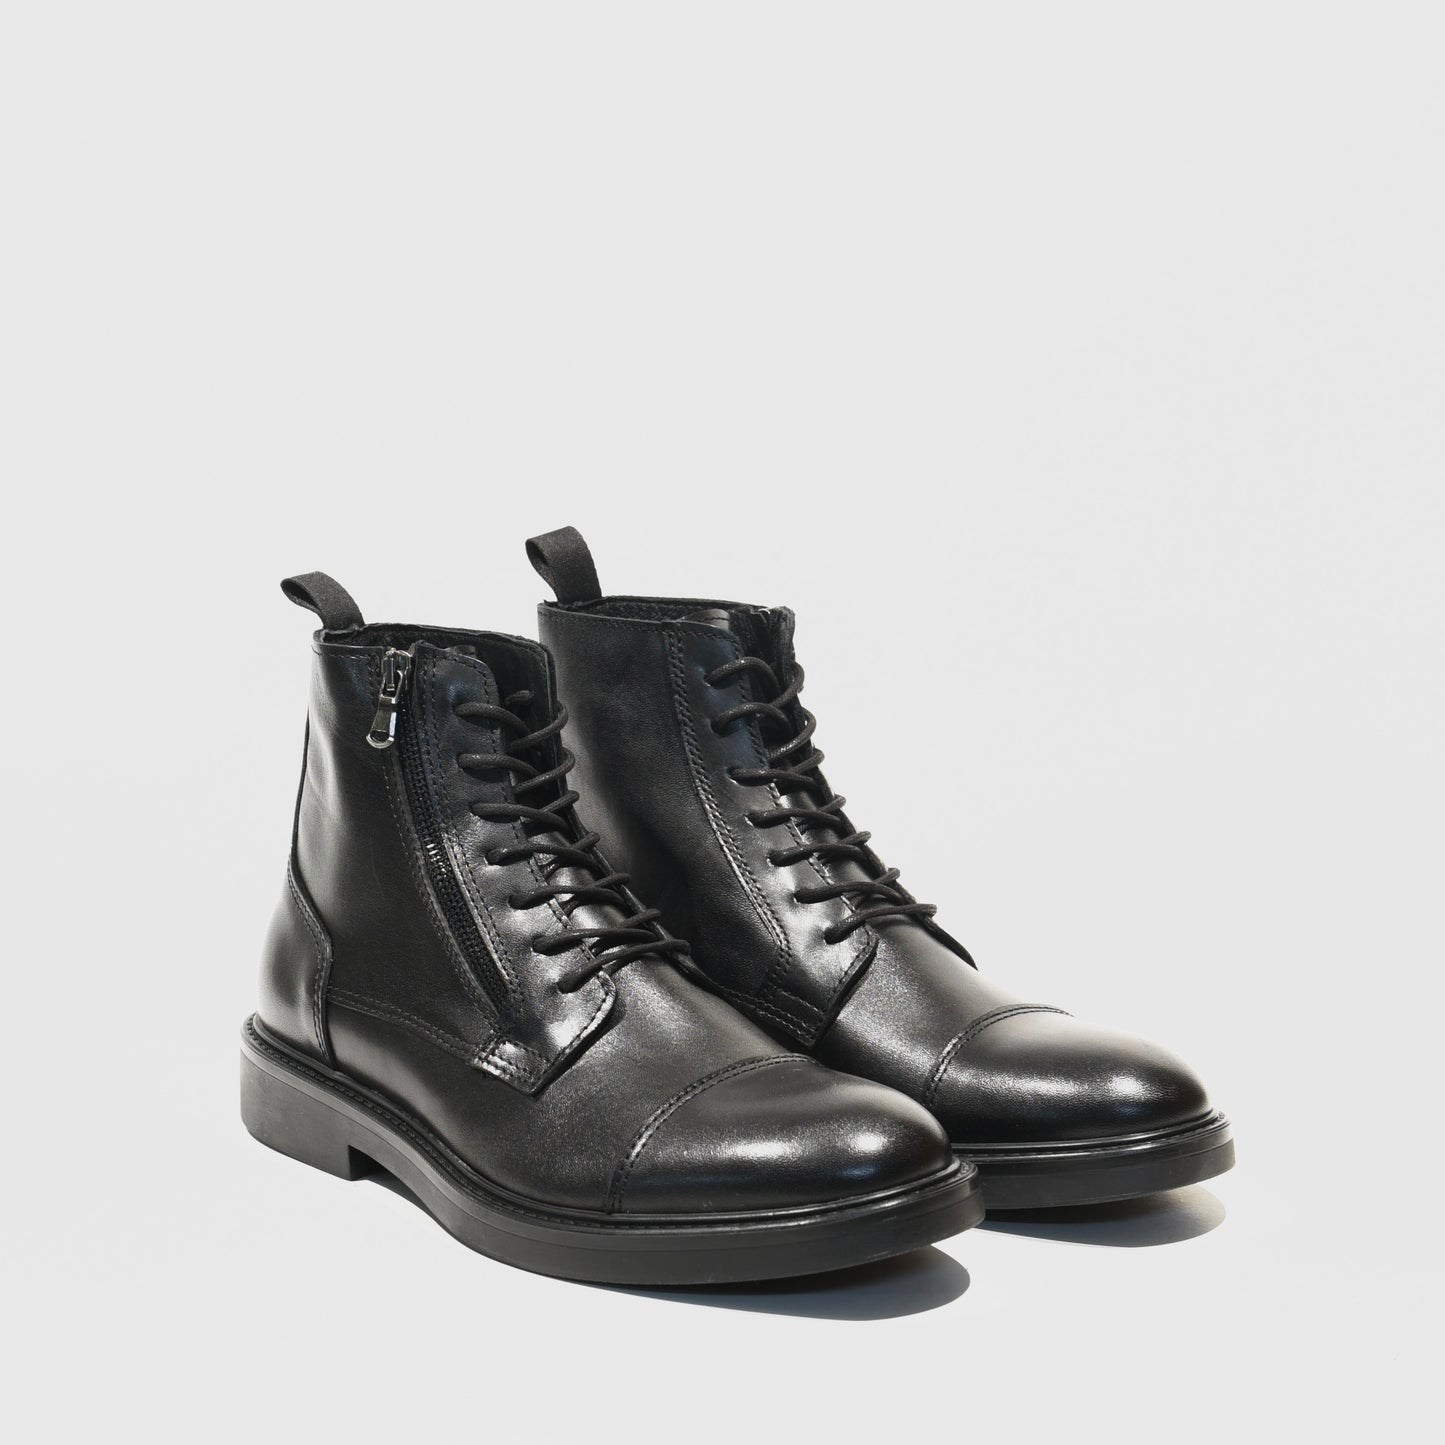 Kebo Italian boots for men in black